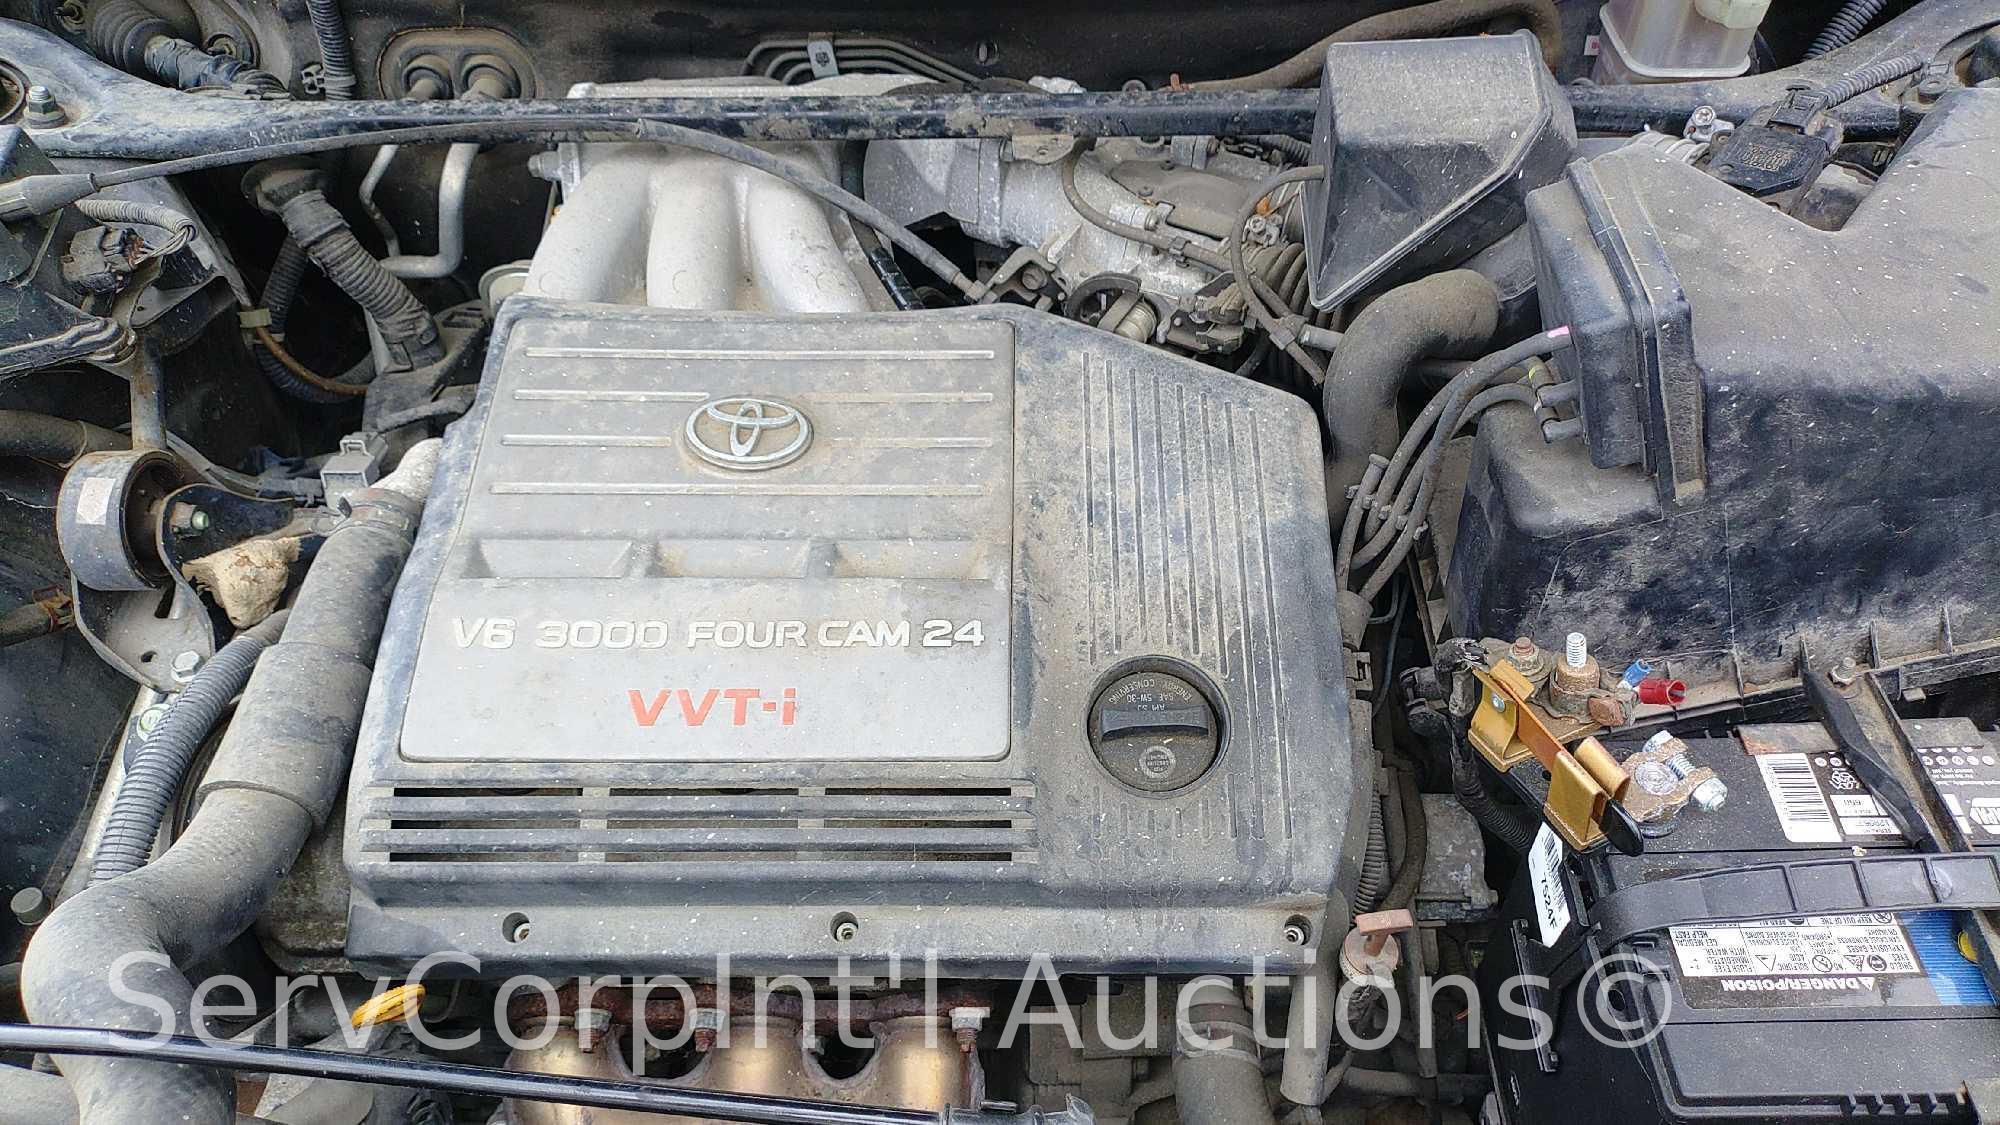 2001 Toyota Highlander Multipurpose Vehicle (MPV), VIN # JTEGF21A310026184